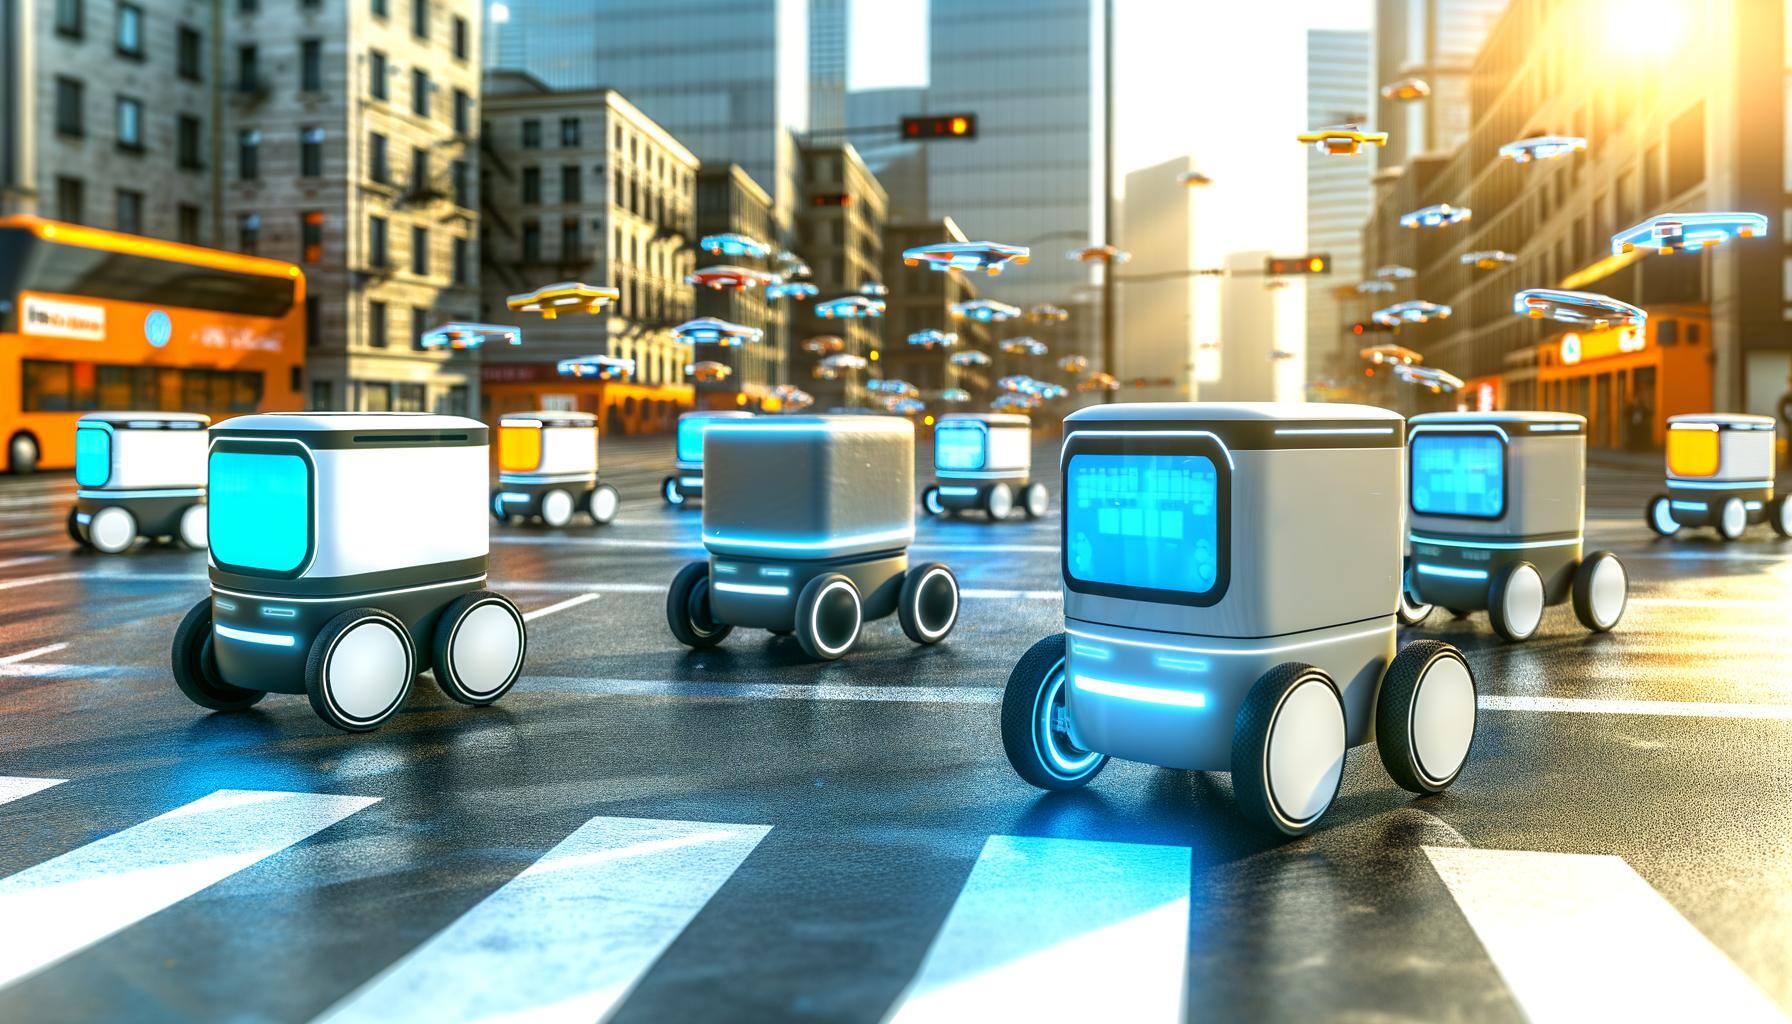 Robotpowered autonomous delivery vehicles